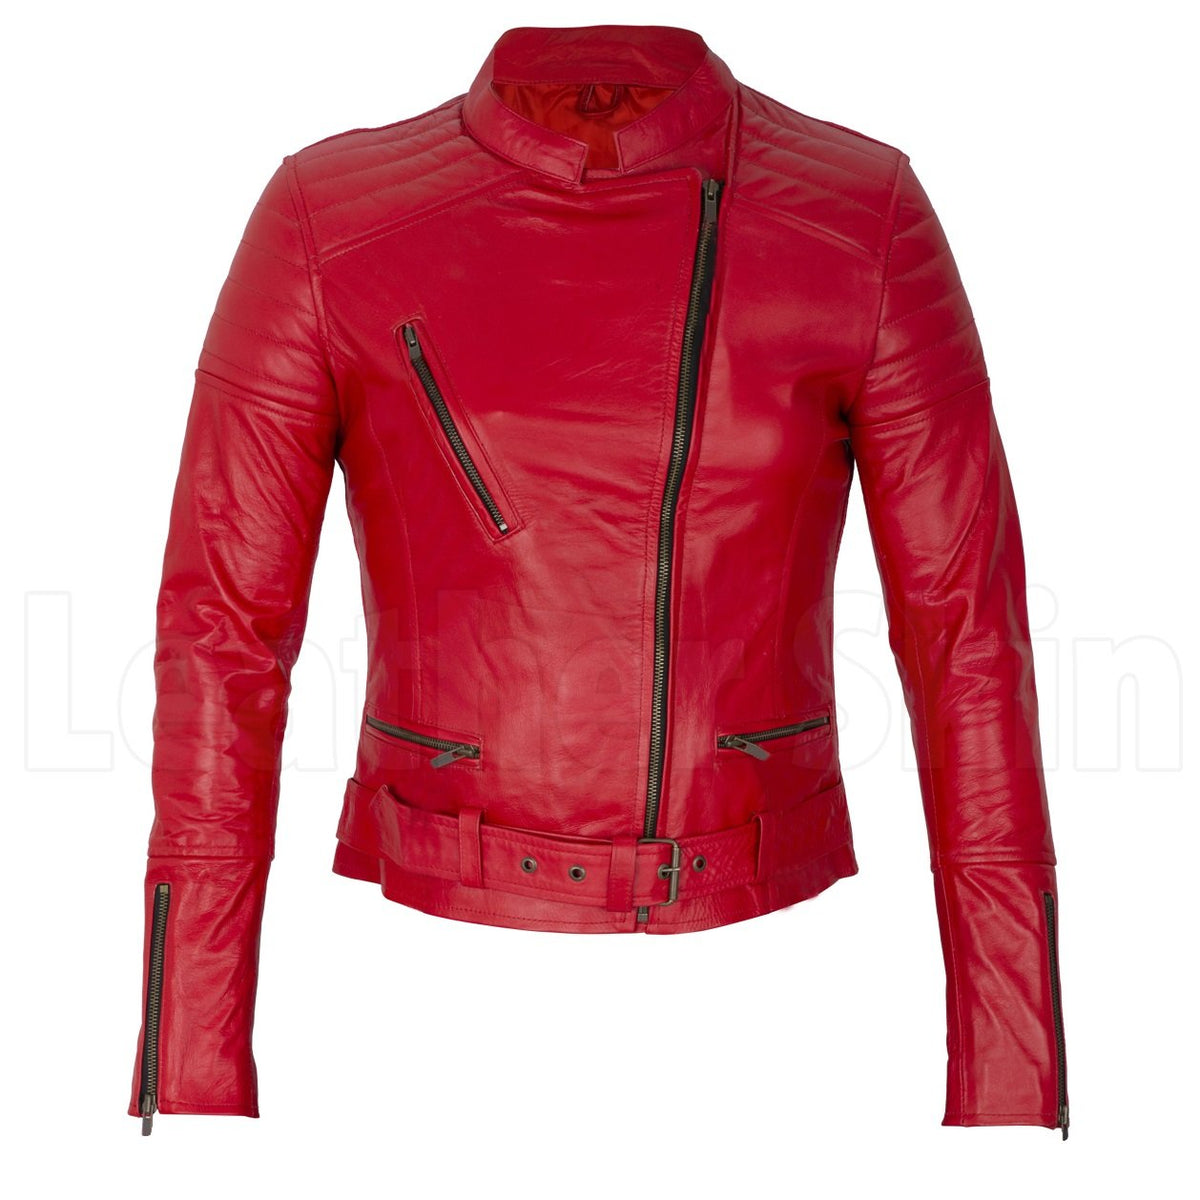 Leather Jacket Women | Black Leather Jackets for Women - Leather Skin Shop